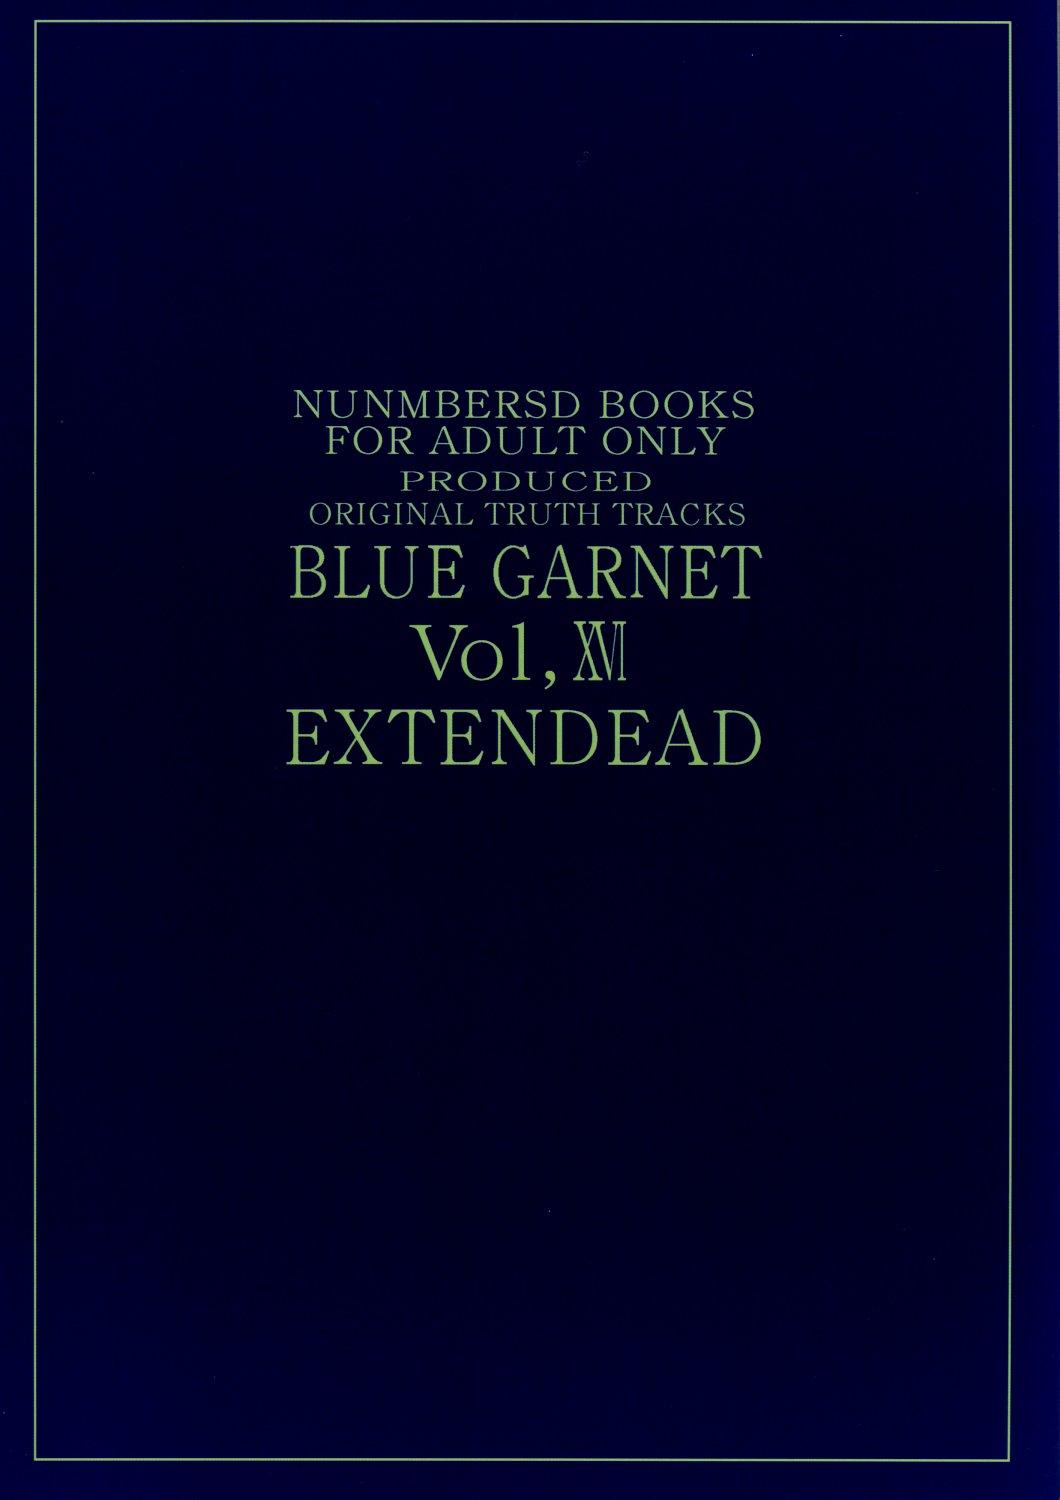 BLUE GARNET XVI EXTENDEAD 49